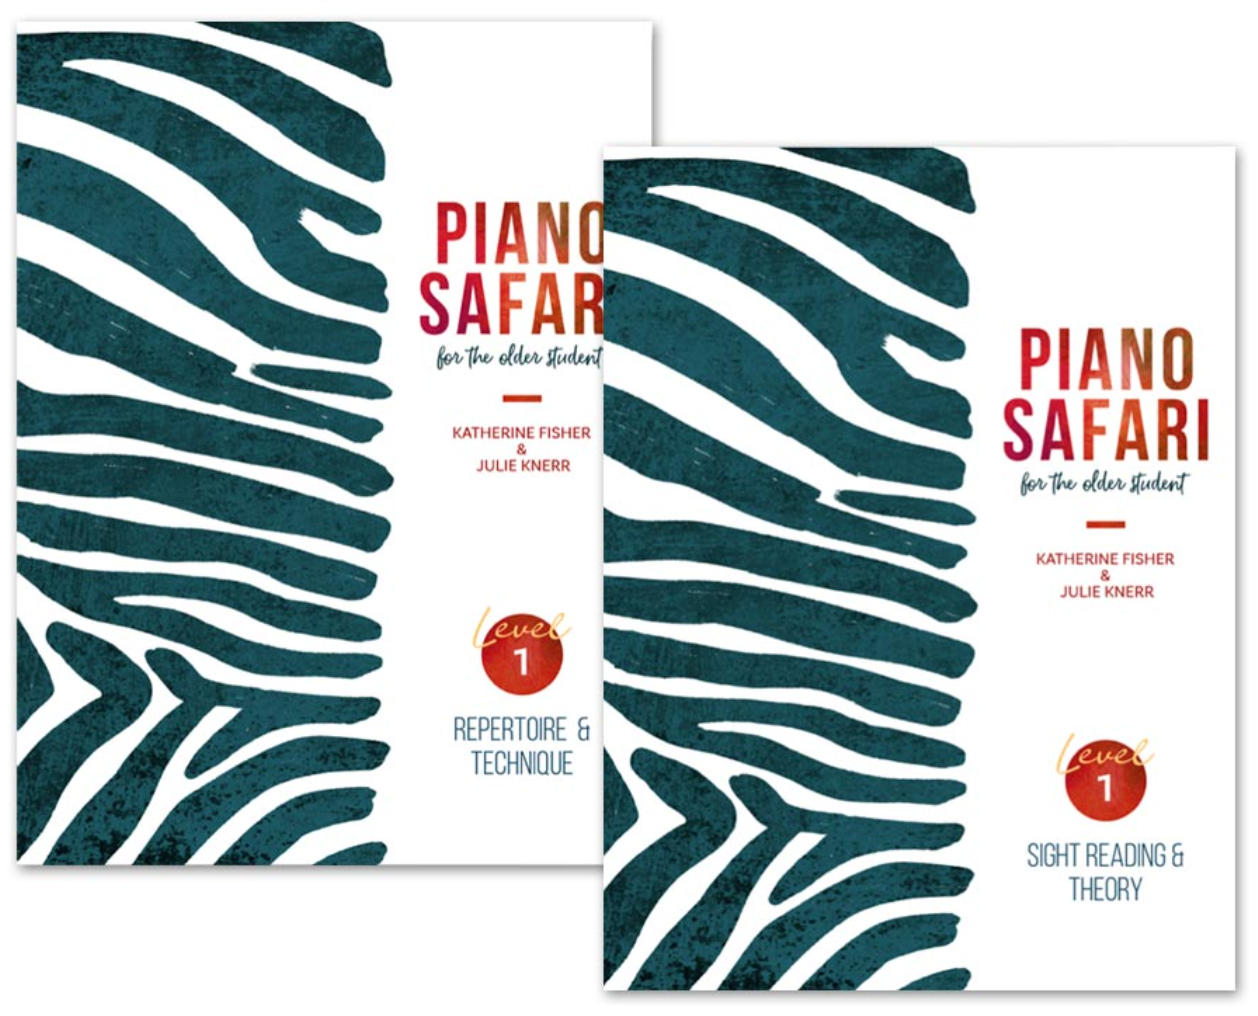 Piano Safari Older Student Repertoire & Technique 1 - Fisher Katherine; Hague Julie Knerr Piano Safari PNSF1056